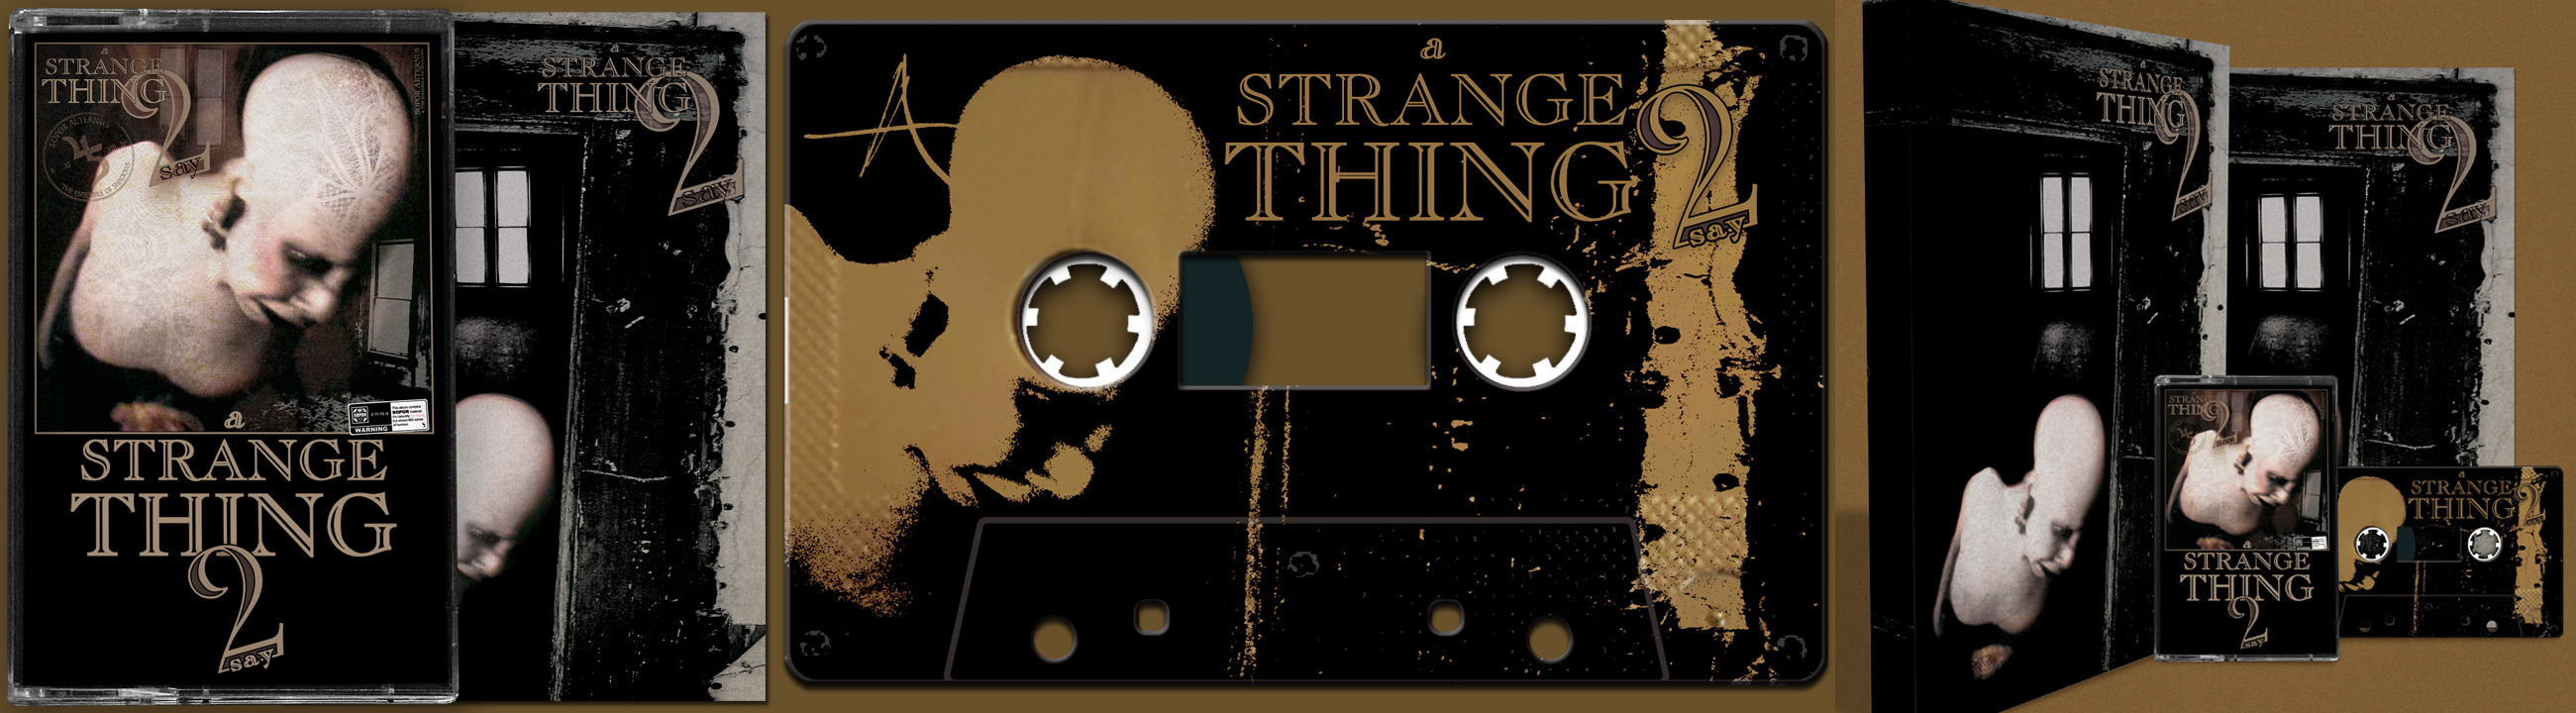 StrangeThing_Tape2